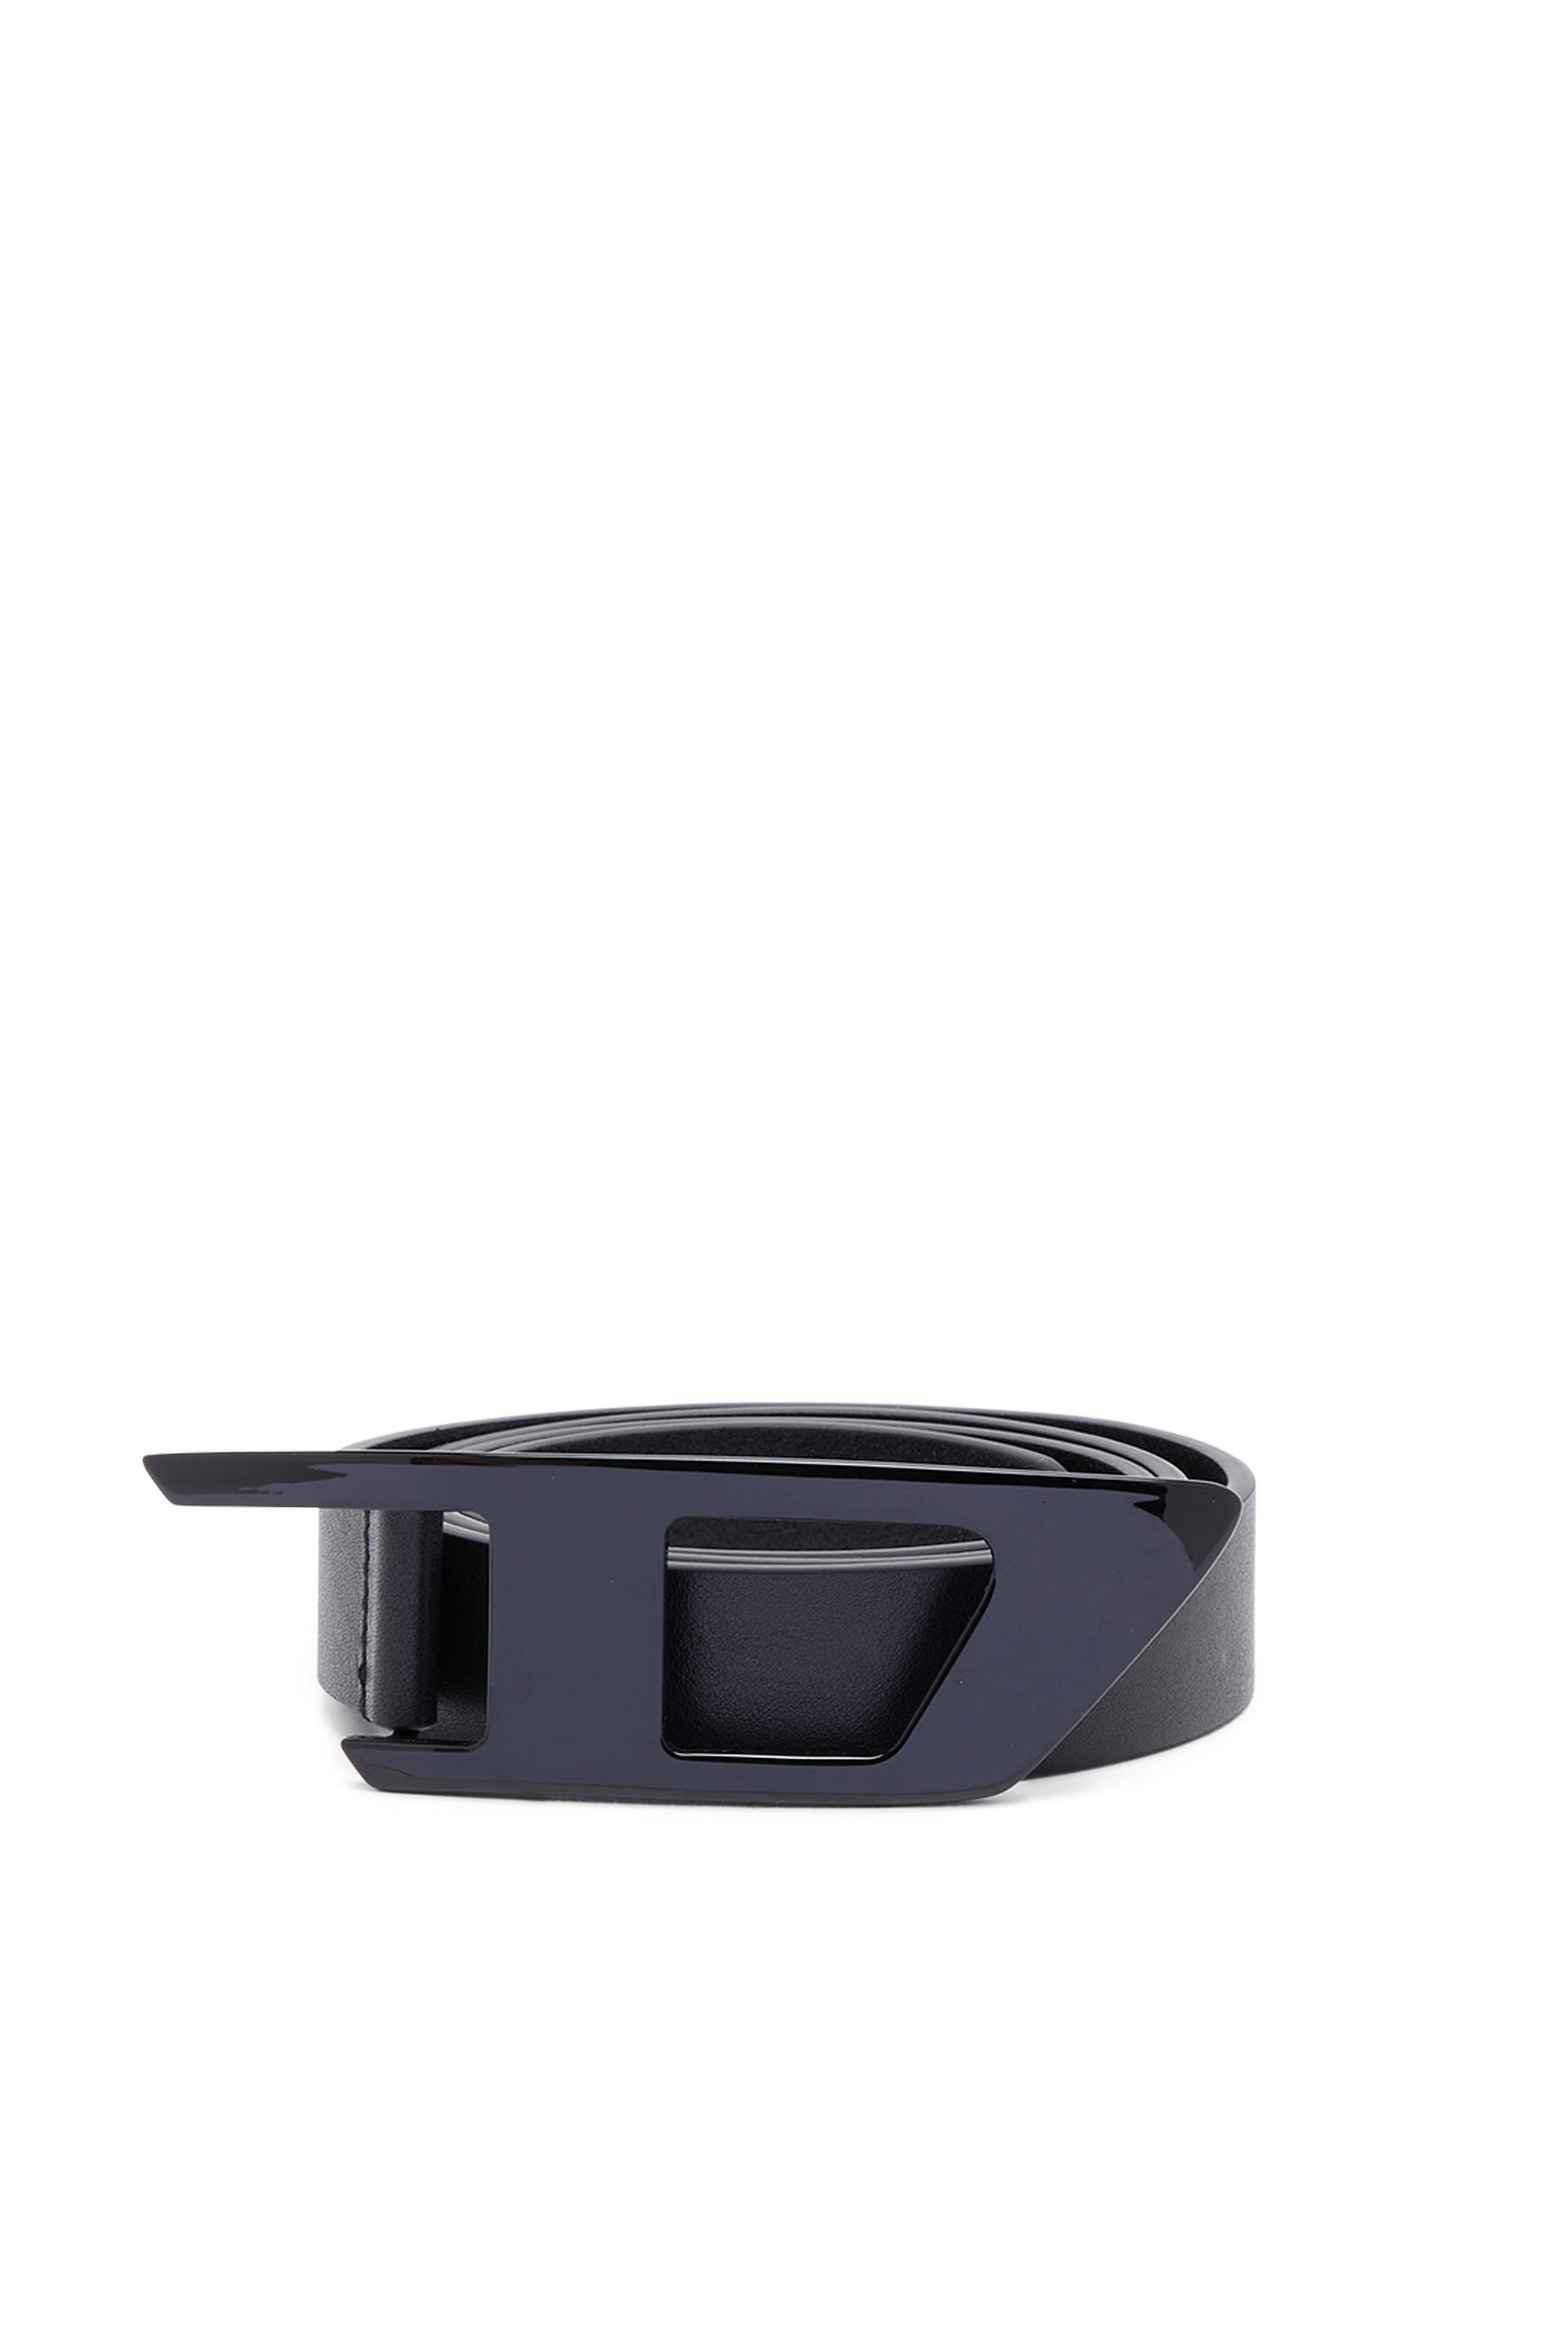 DIESEL メンズ ベルト B-DLOGO II ディーゼル ファッション雑貨 ベルト ブラック【送料無料】